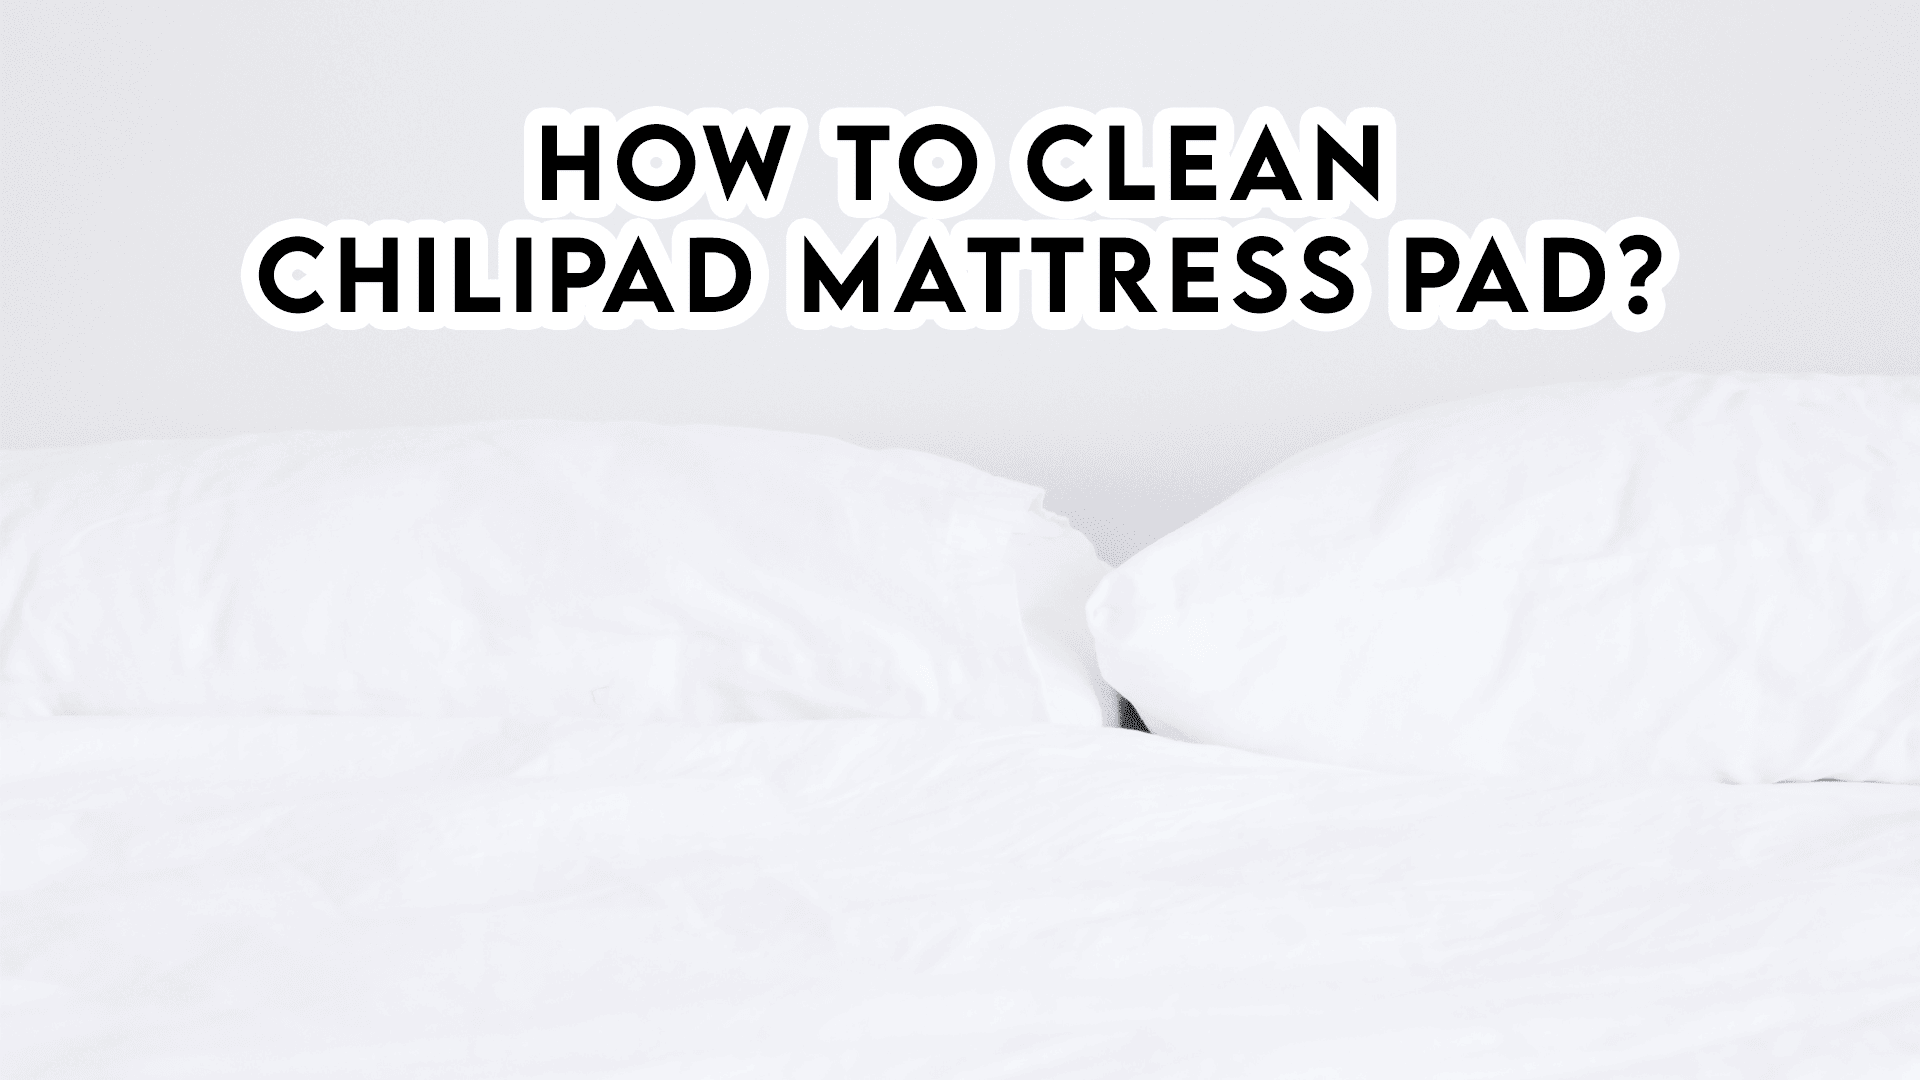 How to Clean Chilipad Mattress Pad?